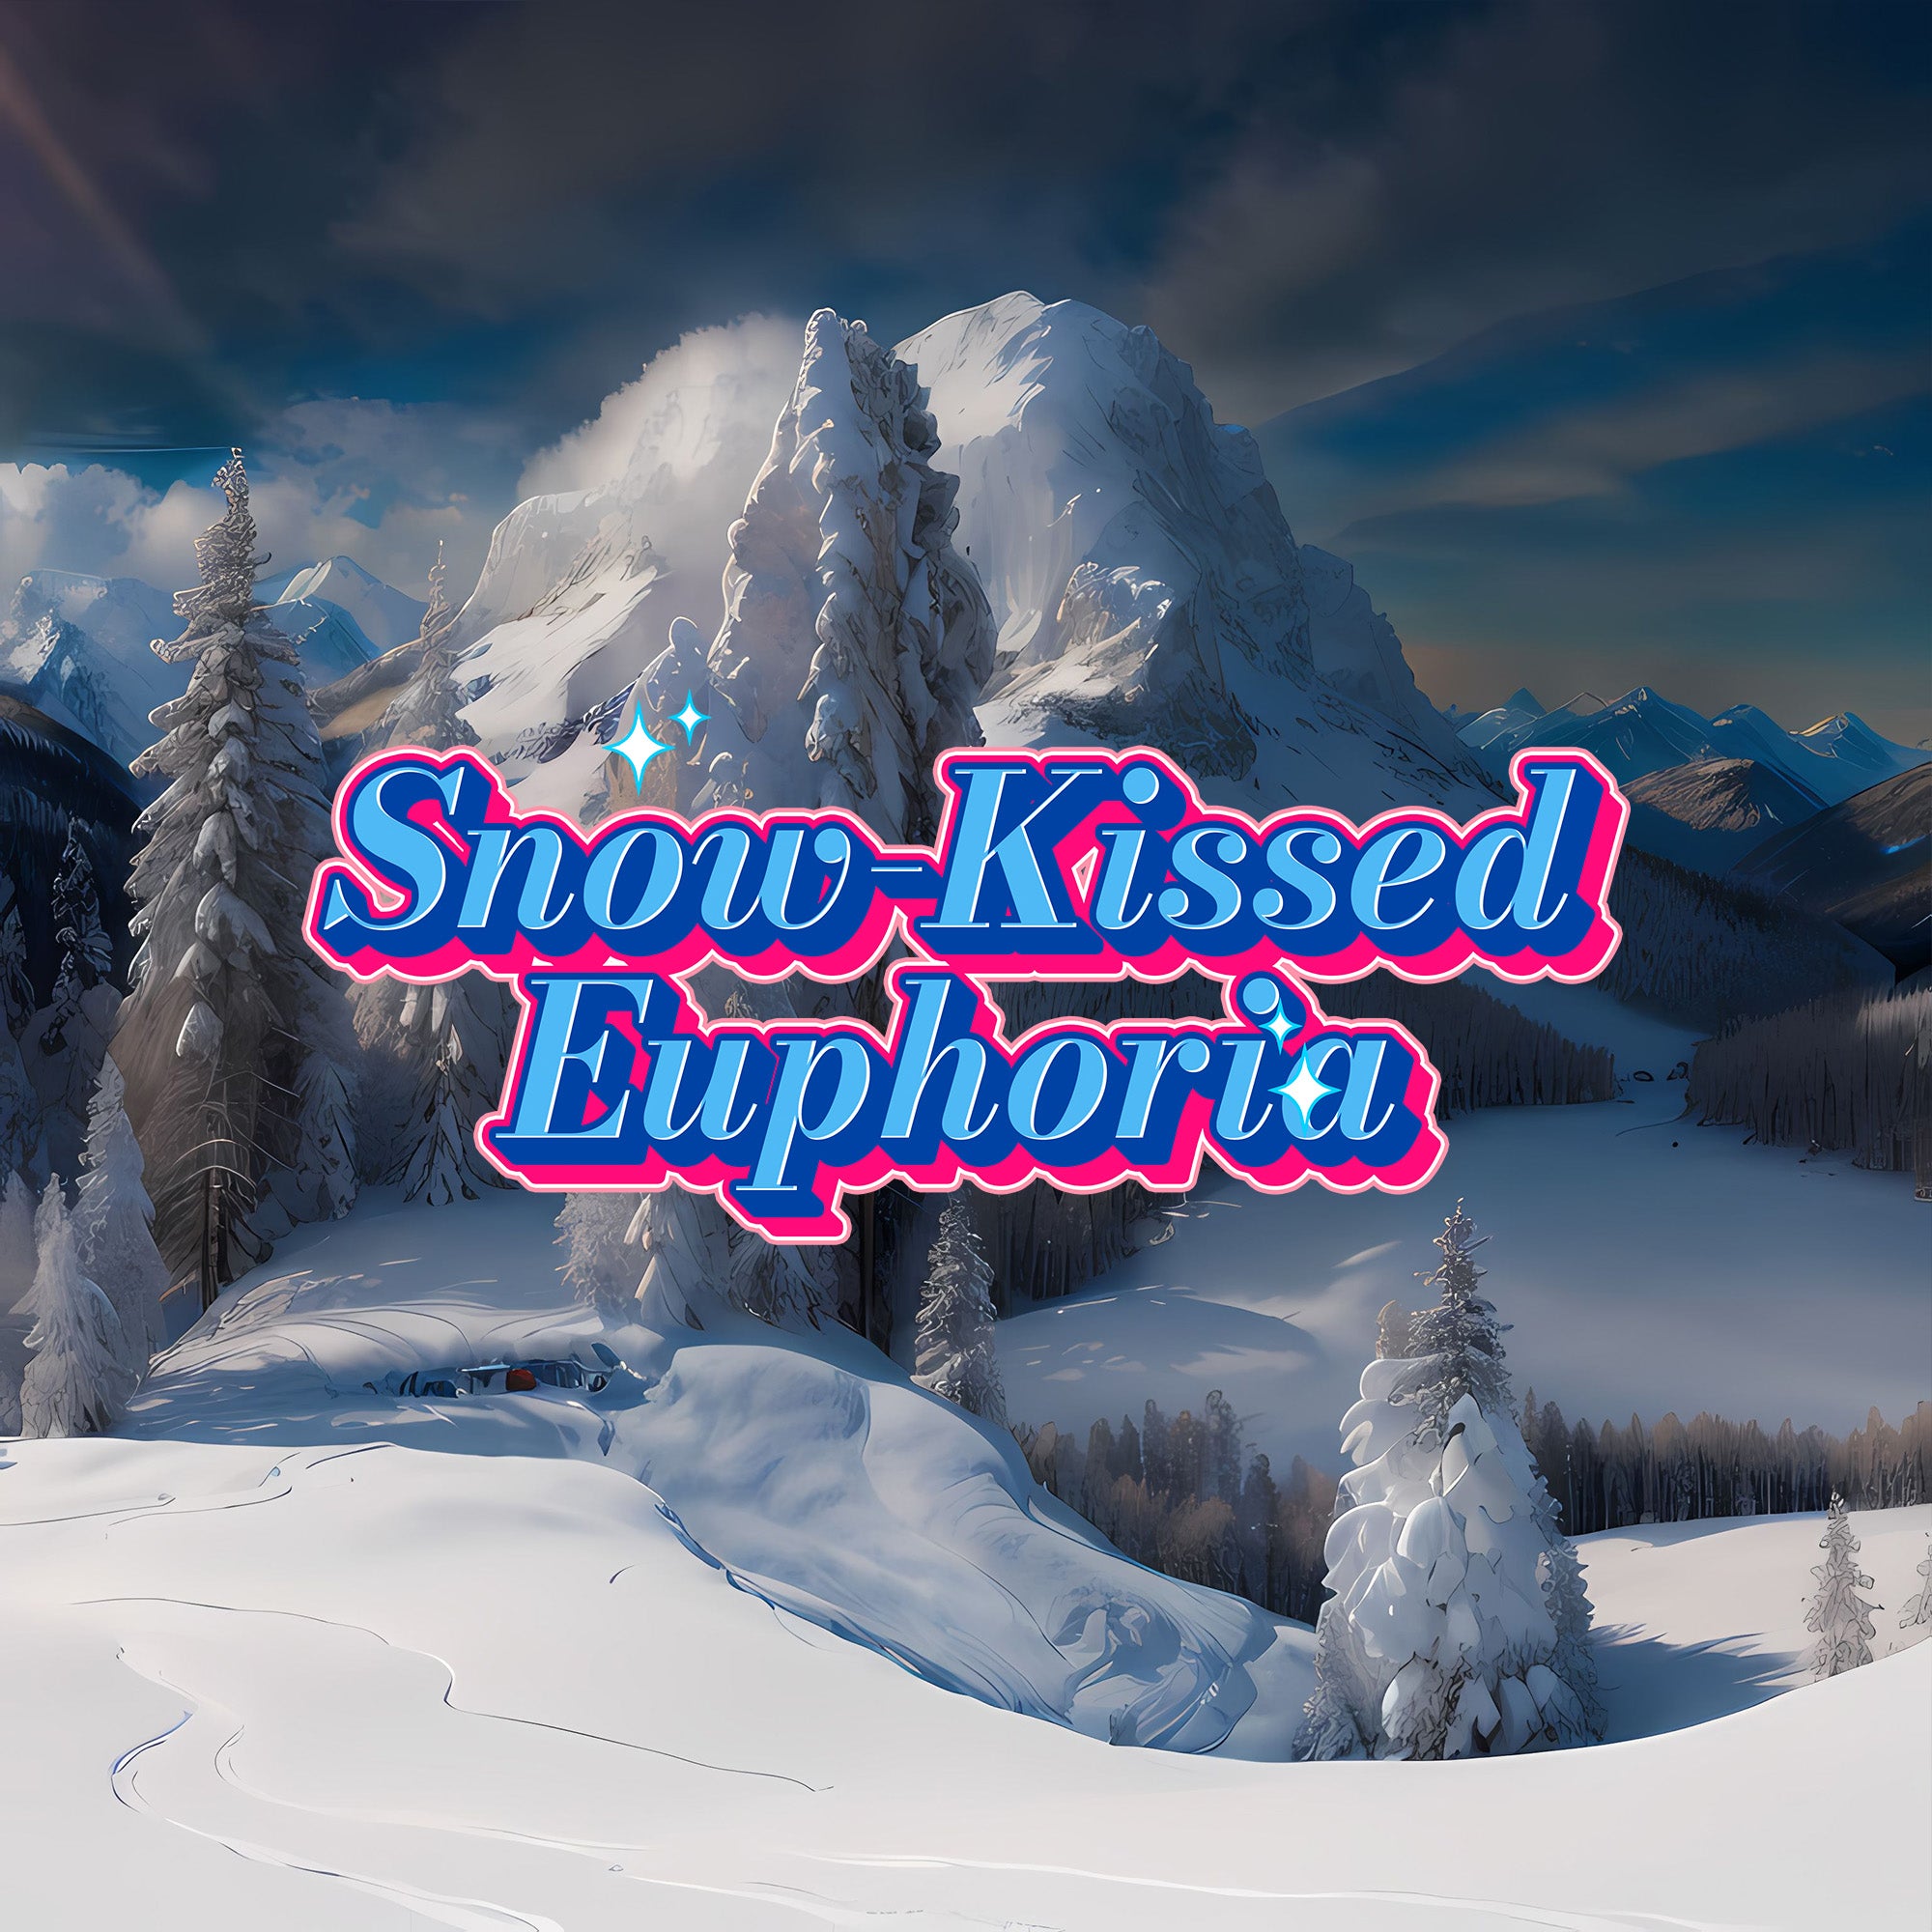 Snow-Kissed Euphoria